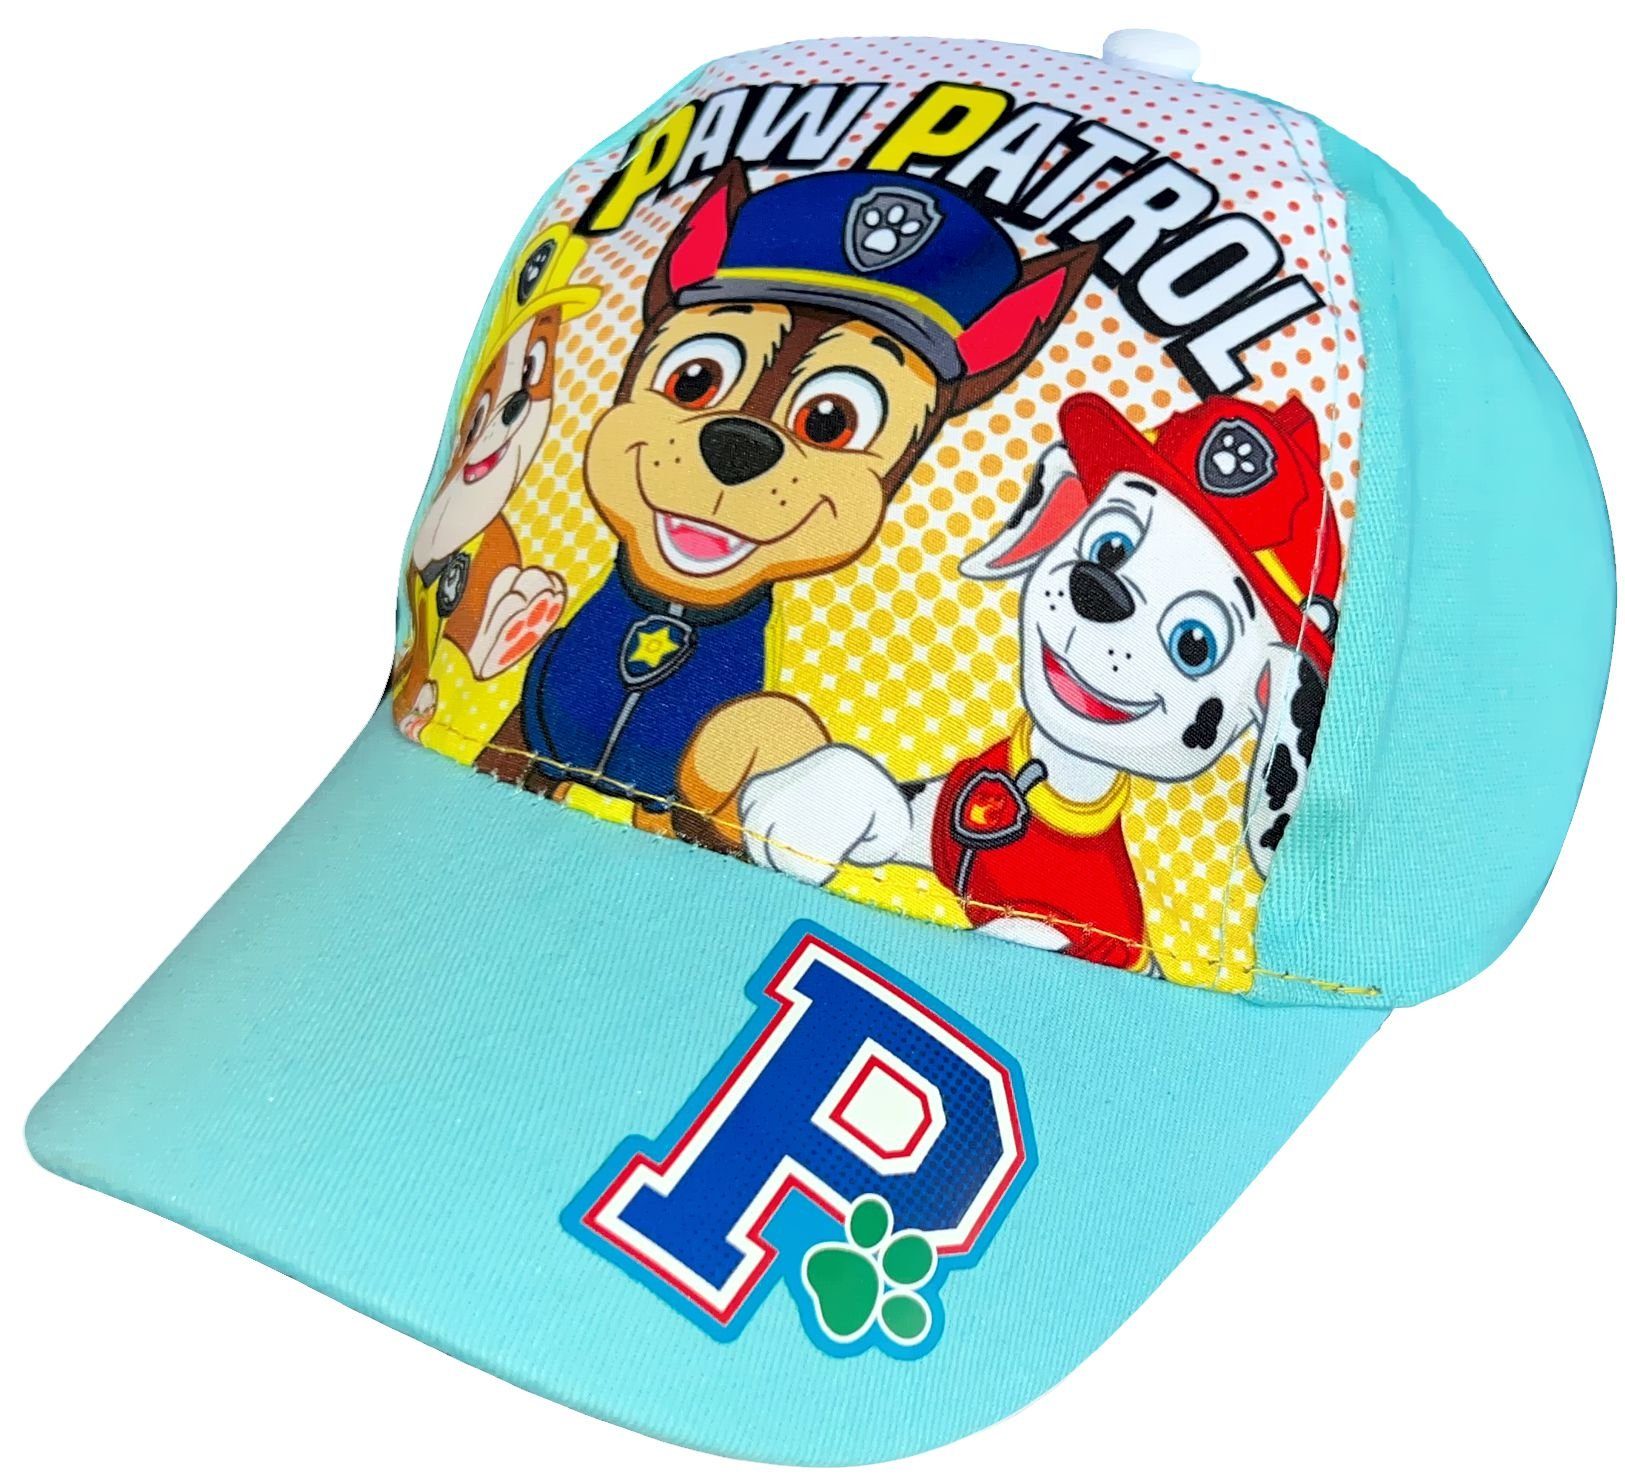 Baseball Schirmmütze PAW PATROL PAWPATROL türkis Cap Jungen + Basecap blau